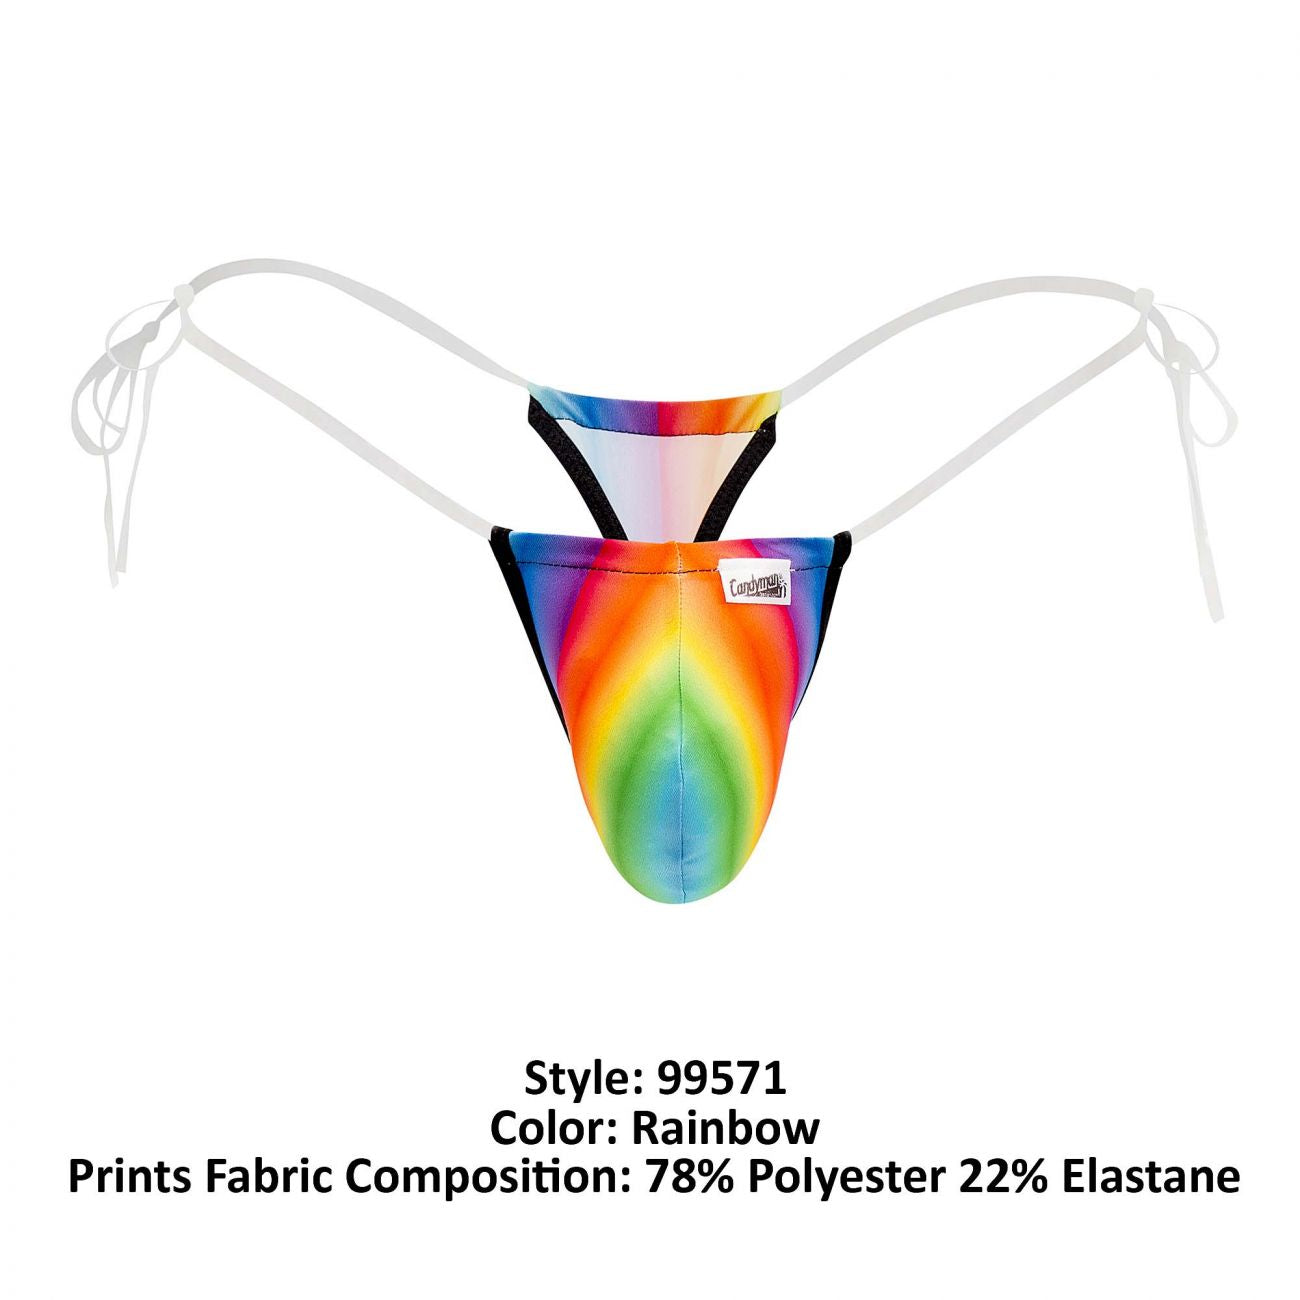 CandyMan 99571 Invisible Strap Micro G-String Rainbow Print